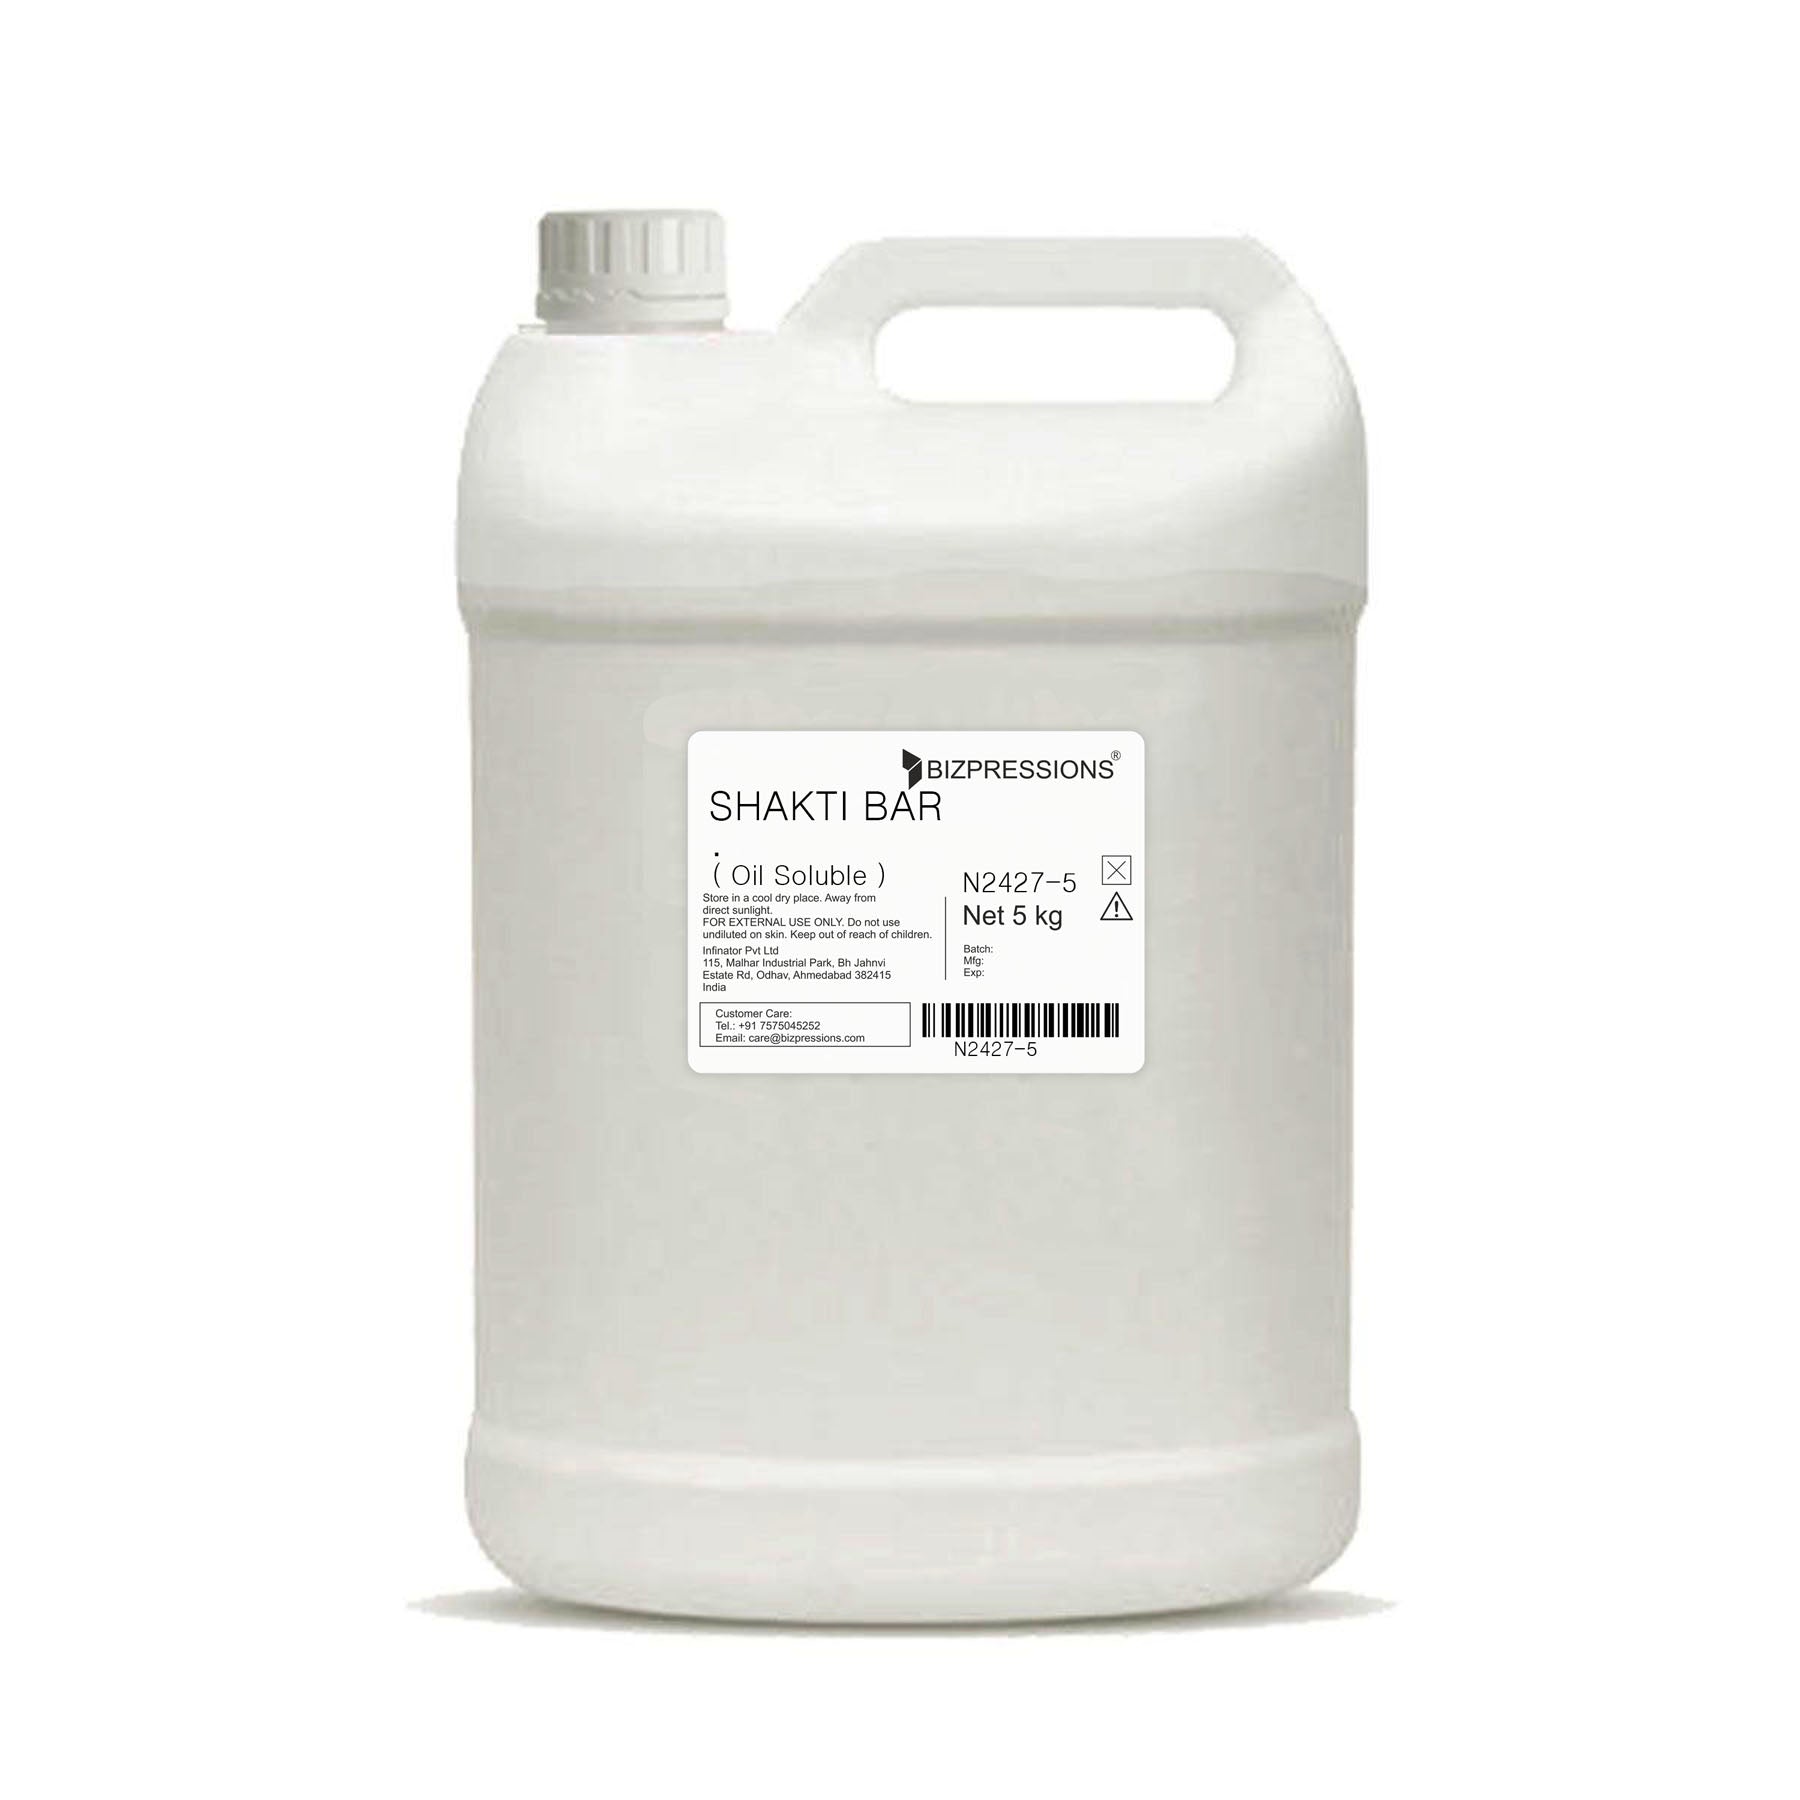 SHAKTI BAR - Fragrance ( Oil Soluble ) - 5 kg